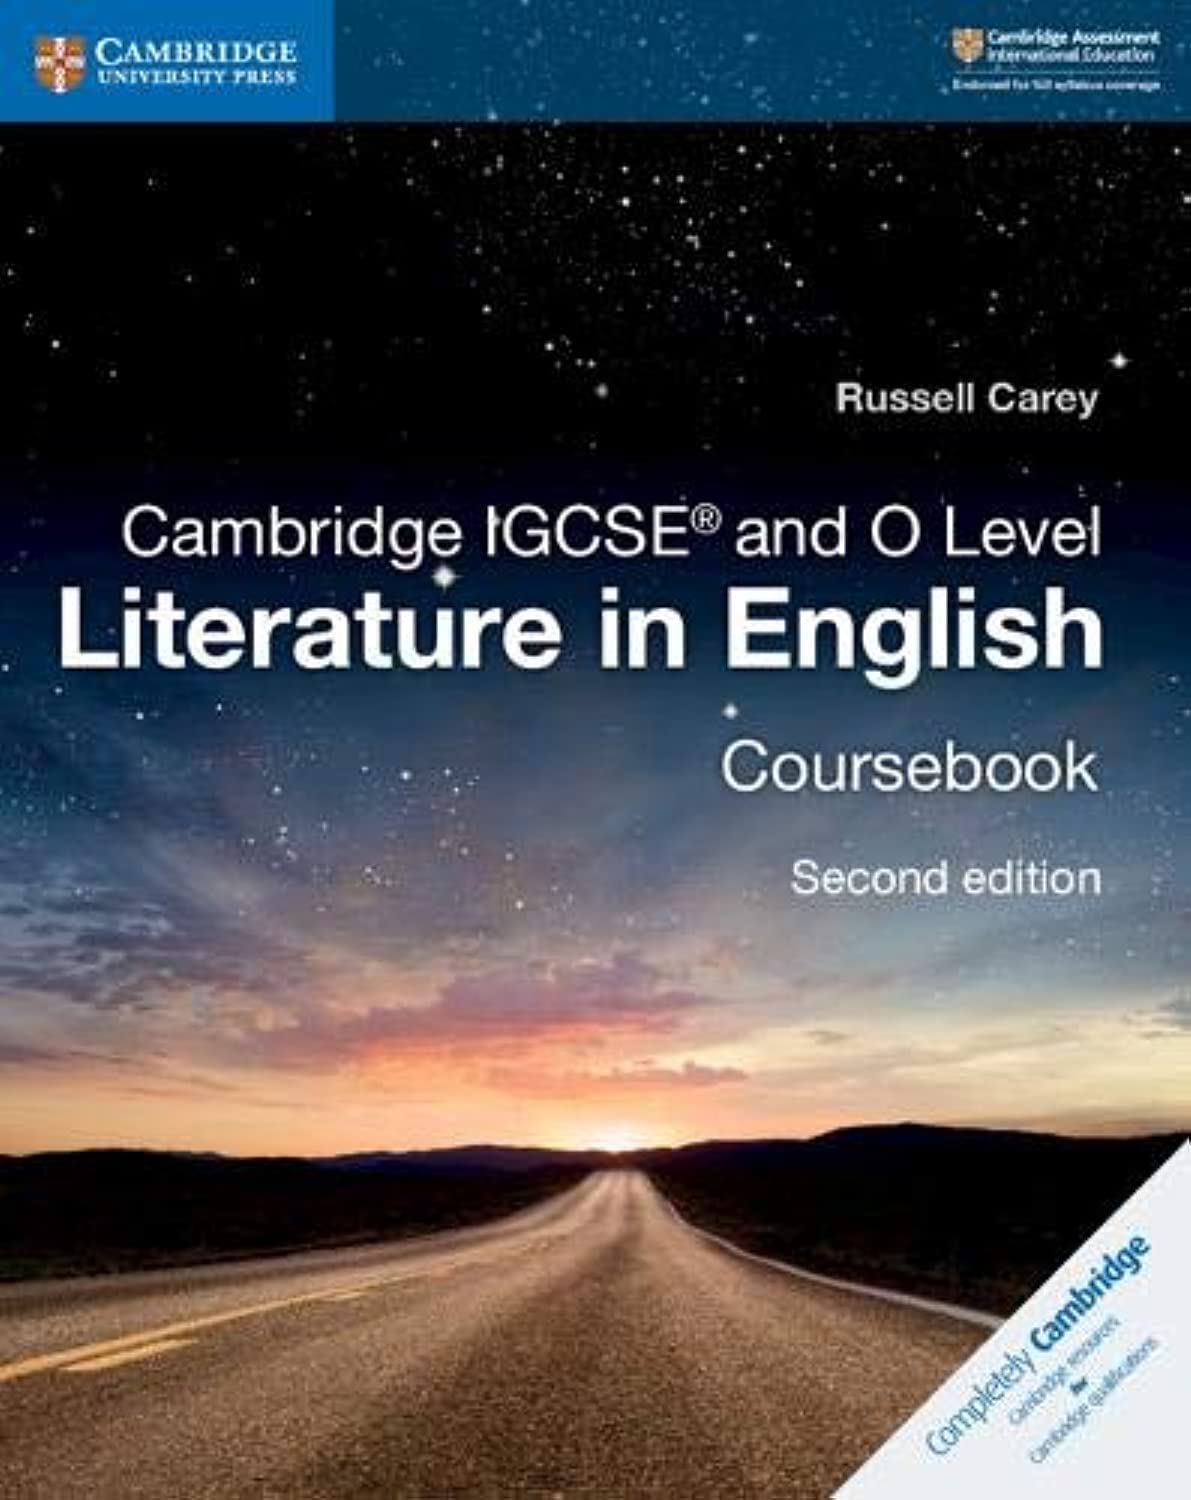 Cambridge IGCSE® and O Level Literature in English Coursebook